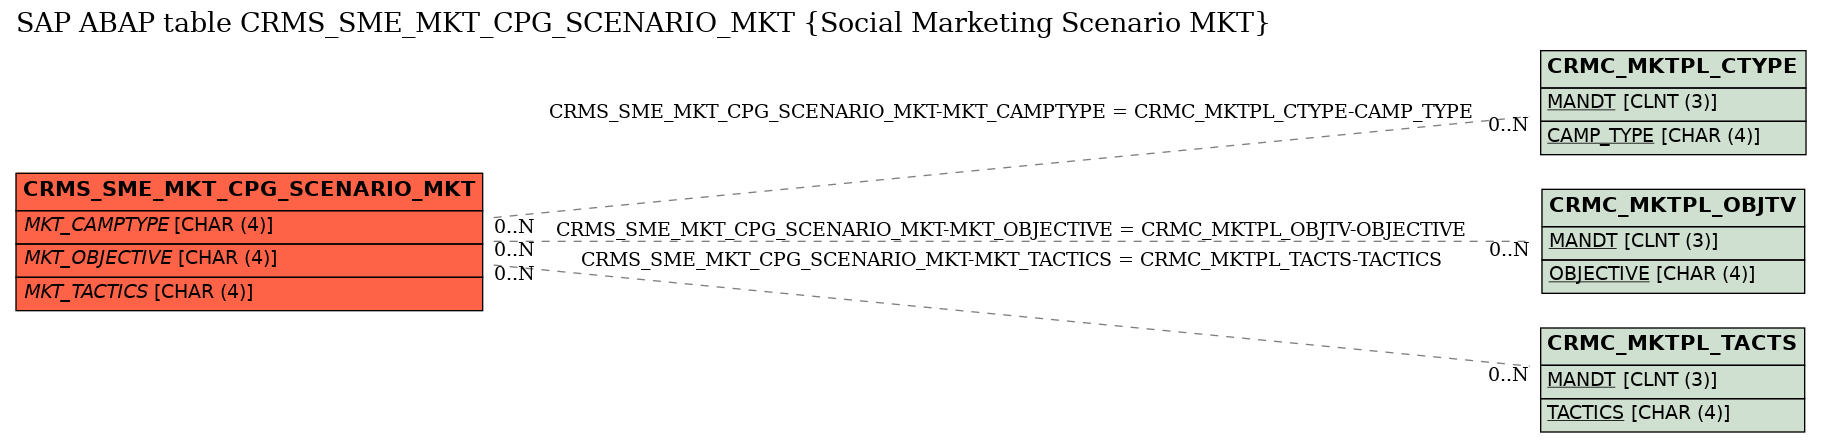 E-R Diagram for table CRMS_SME_MKT_CPG_SCENARIO_MKT (Social Marketing Scenario MKT)